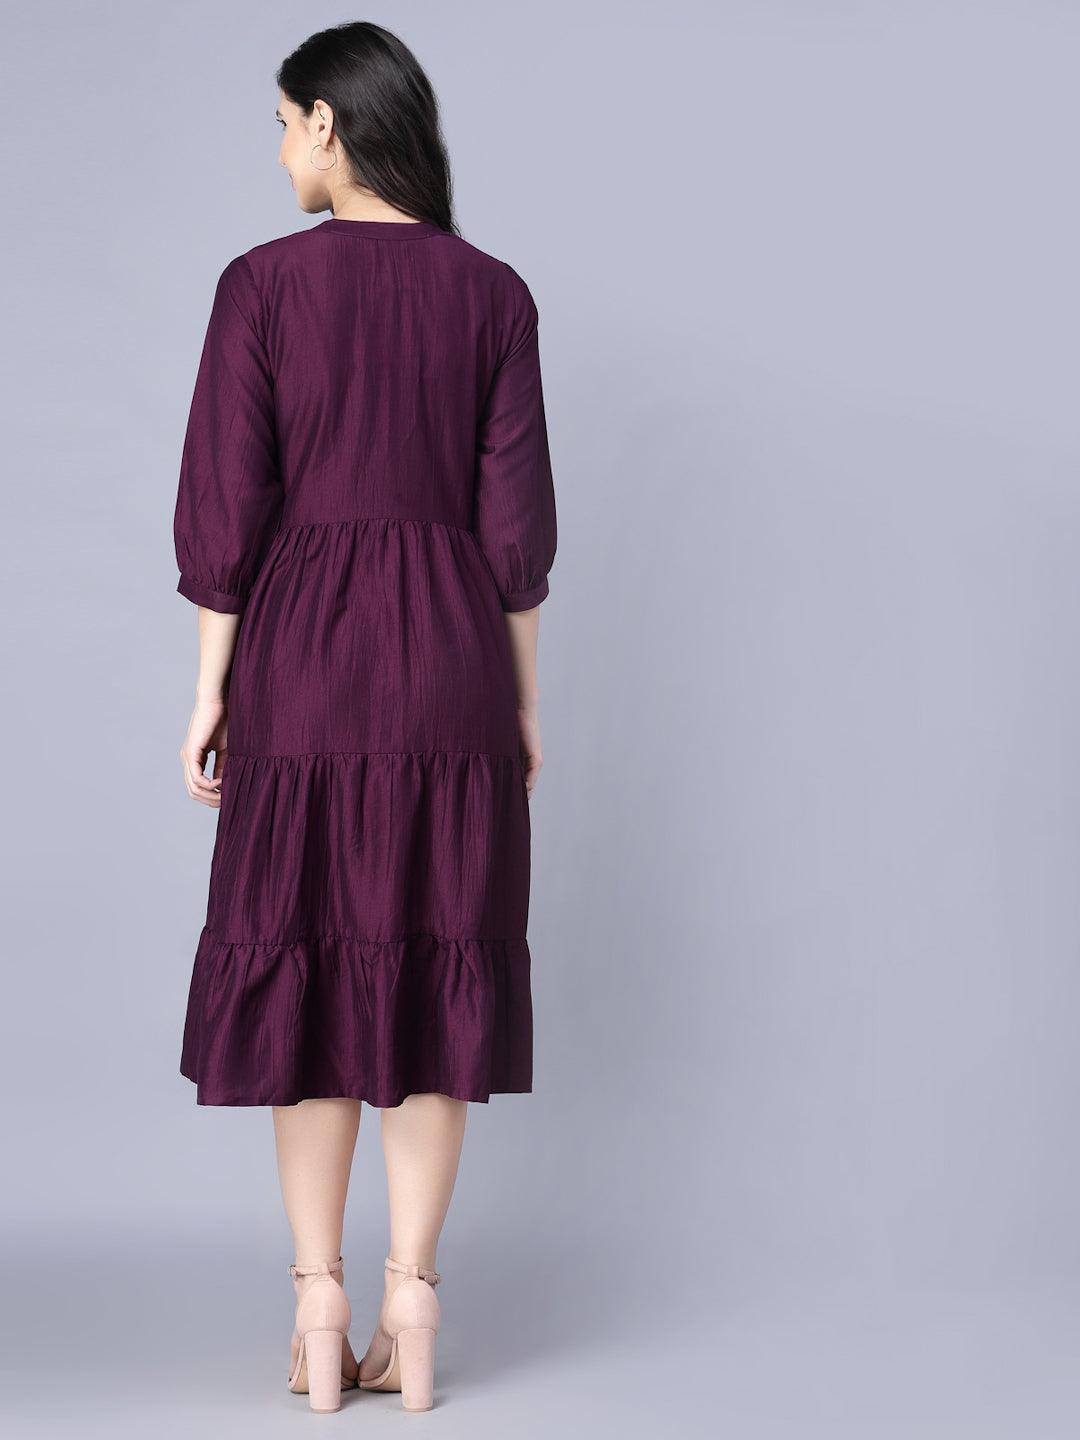 Women's Silk Solid 3/4 Sleeve V Neck Purple Women Dress - Myshka - Indiakreations